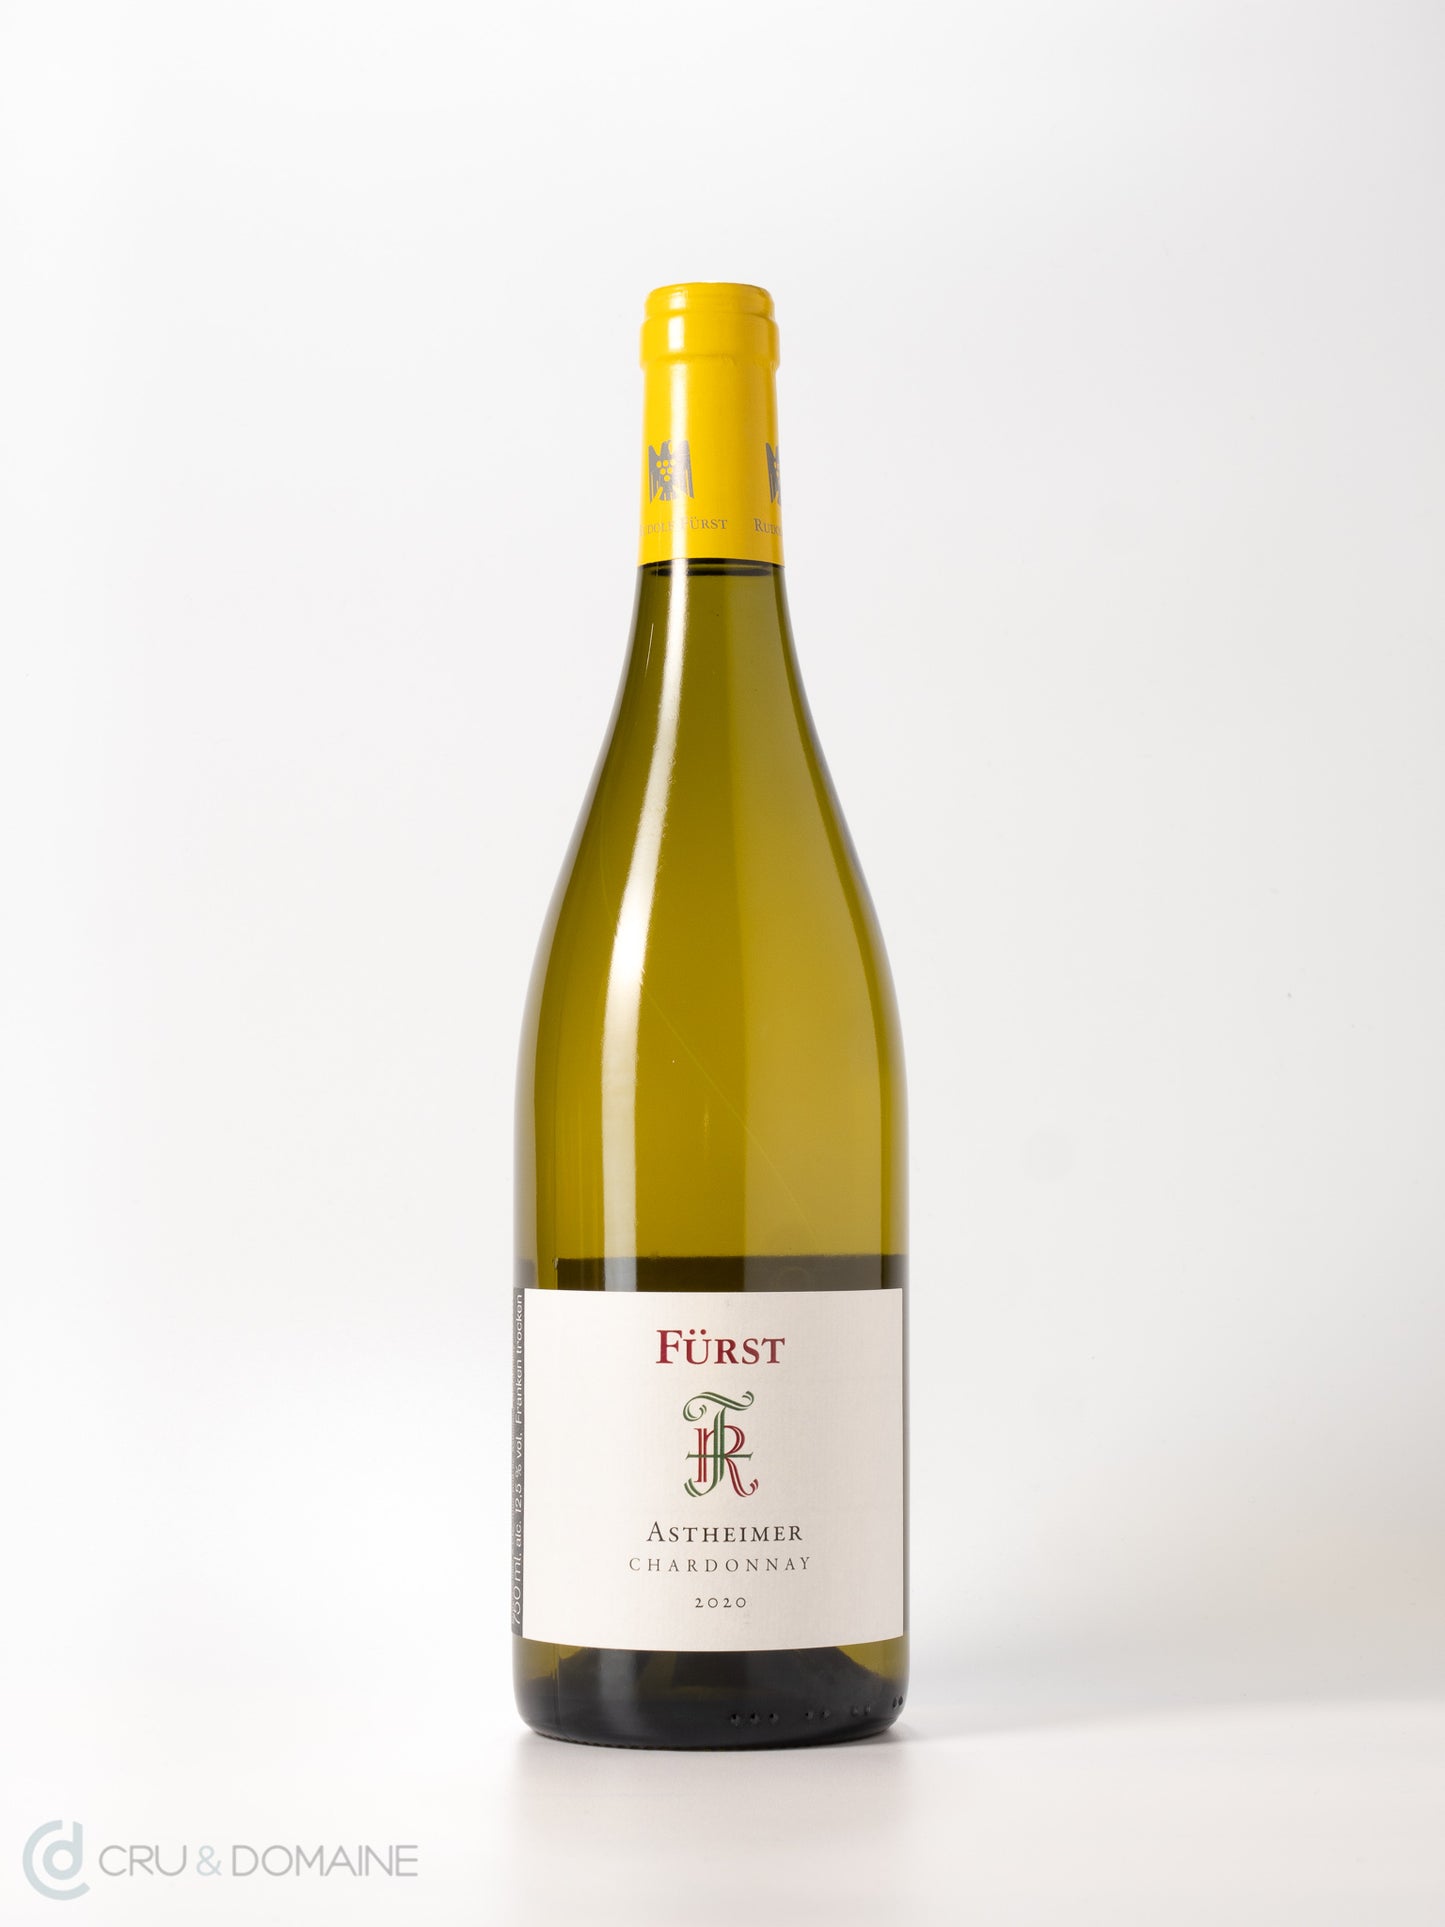 2020 Weingut Furst, ‘Astheimer’, Chardonnay, Franken, Germany